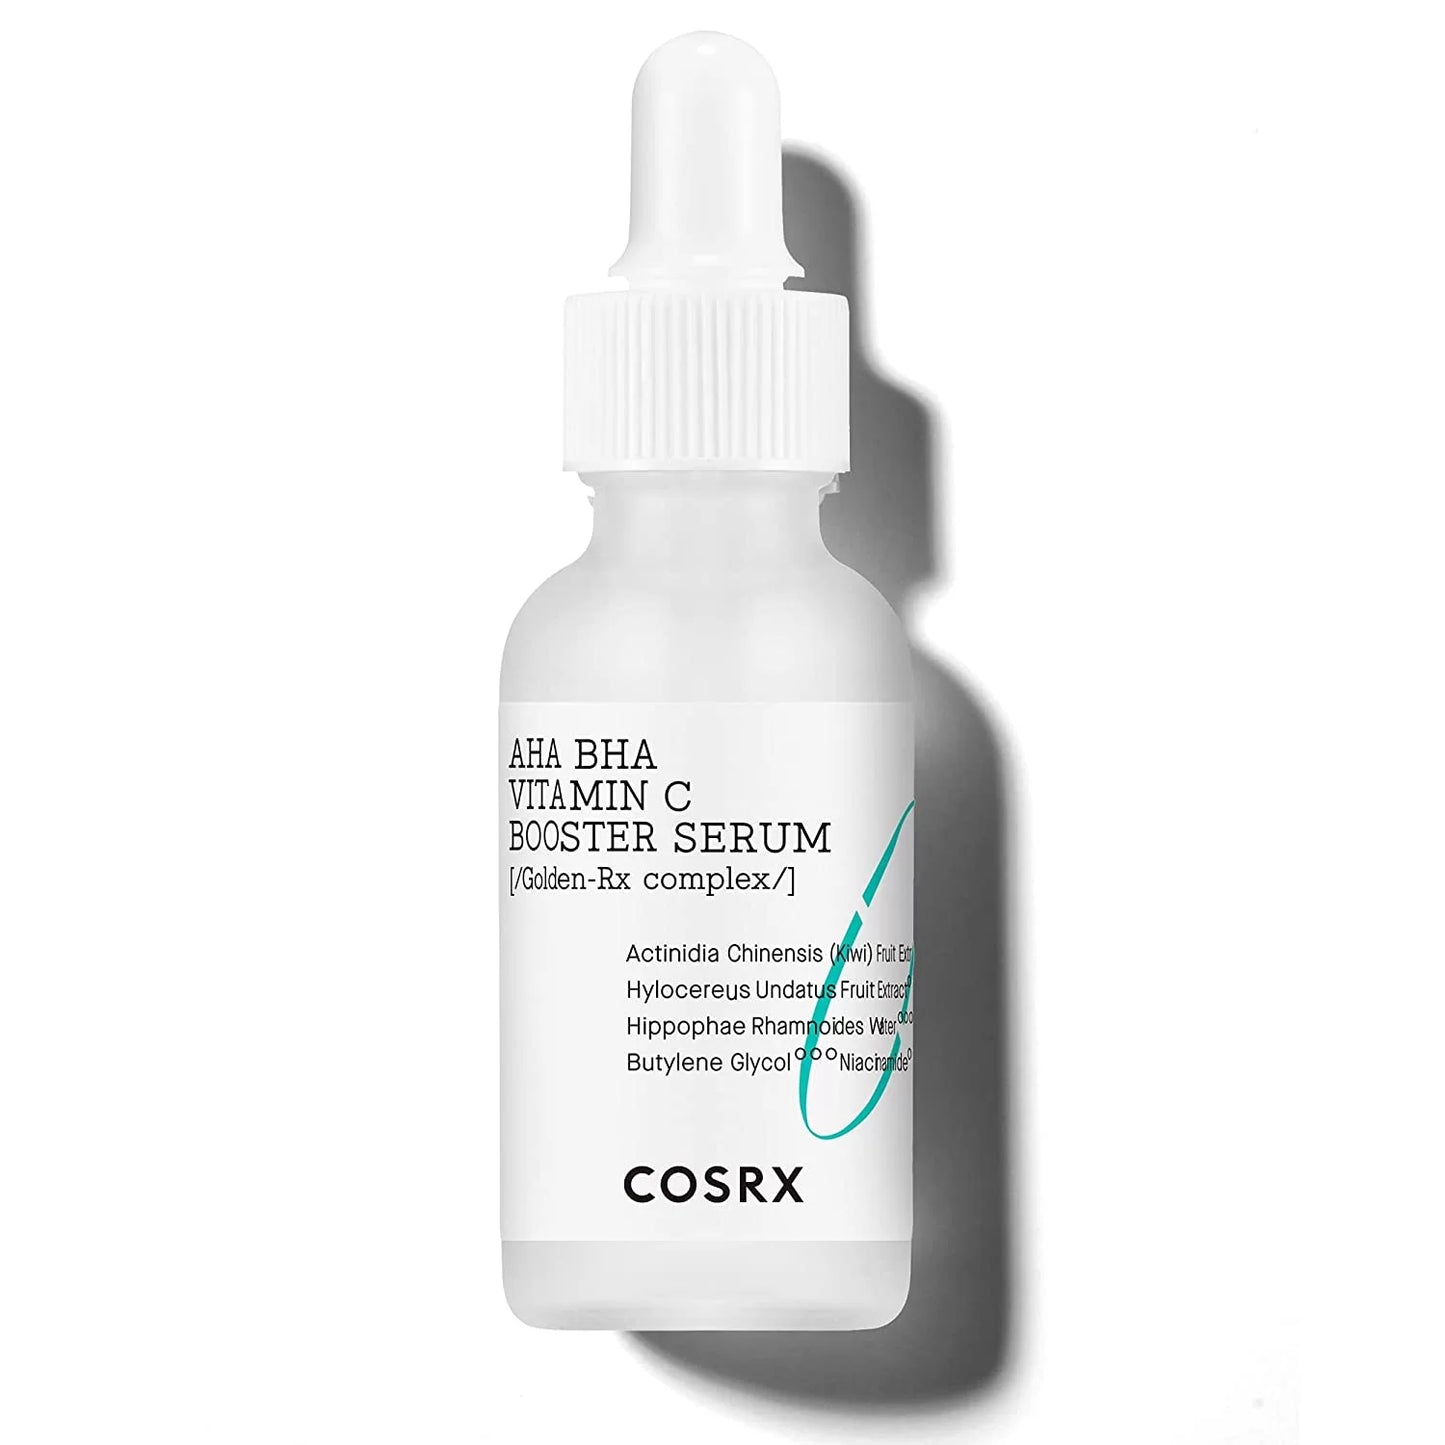 COSRX - Aha Bha Vitamin C Booster Serum, 30ml